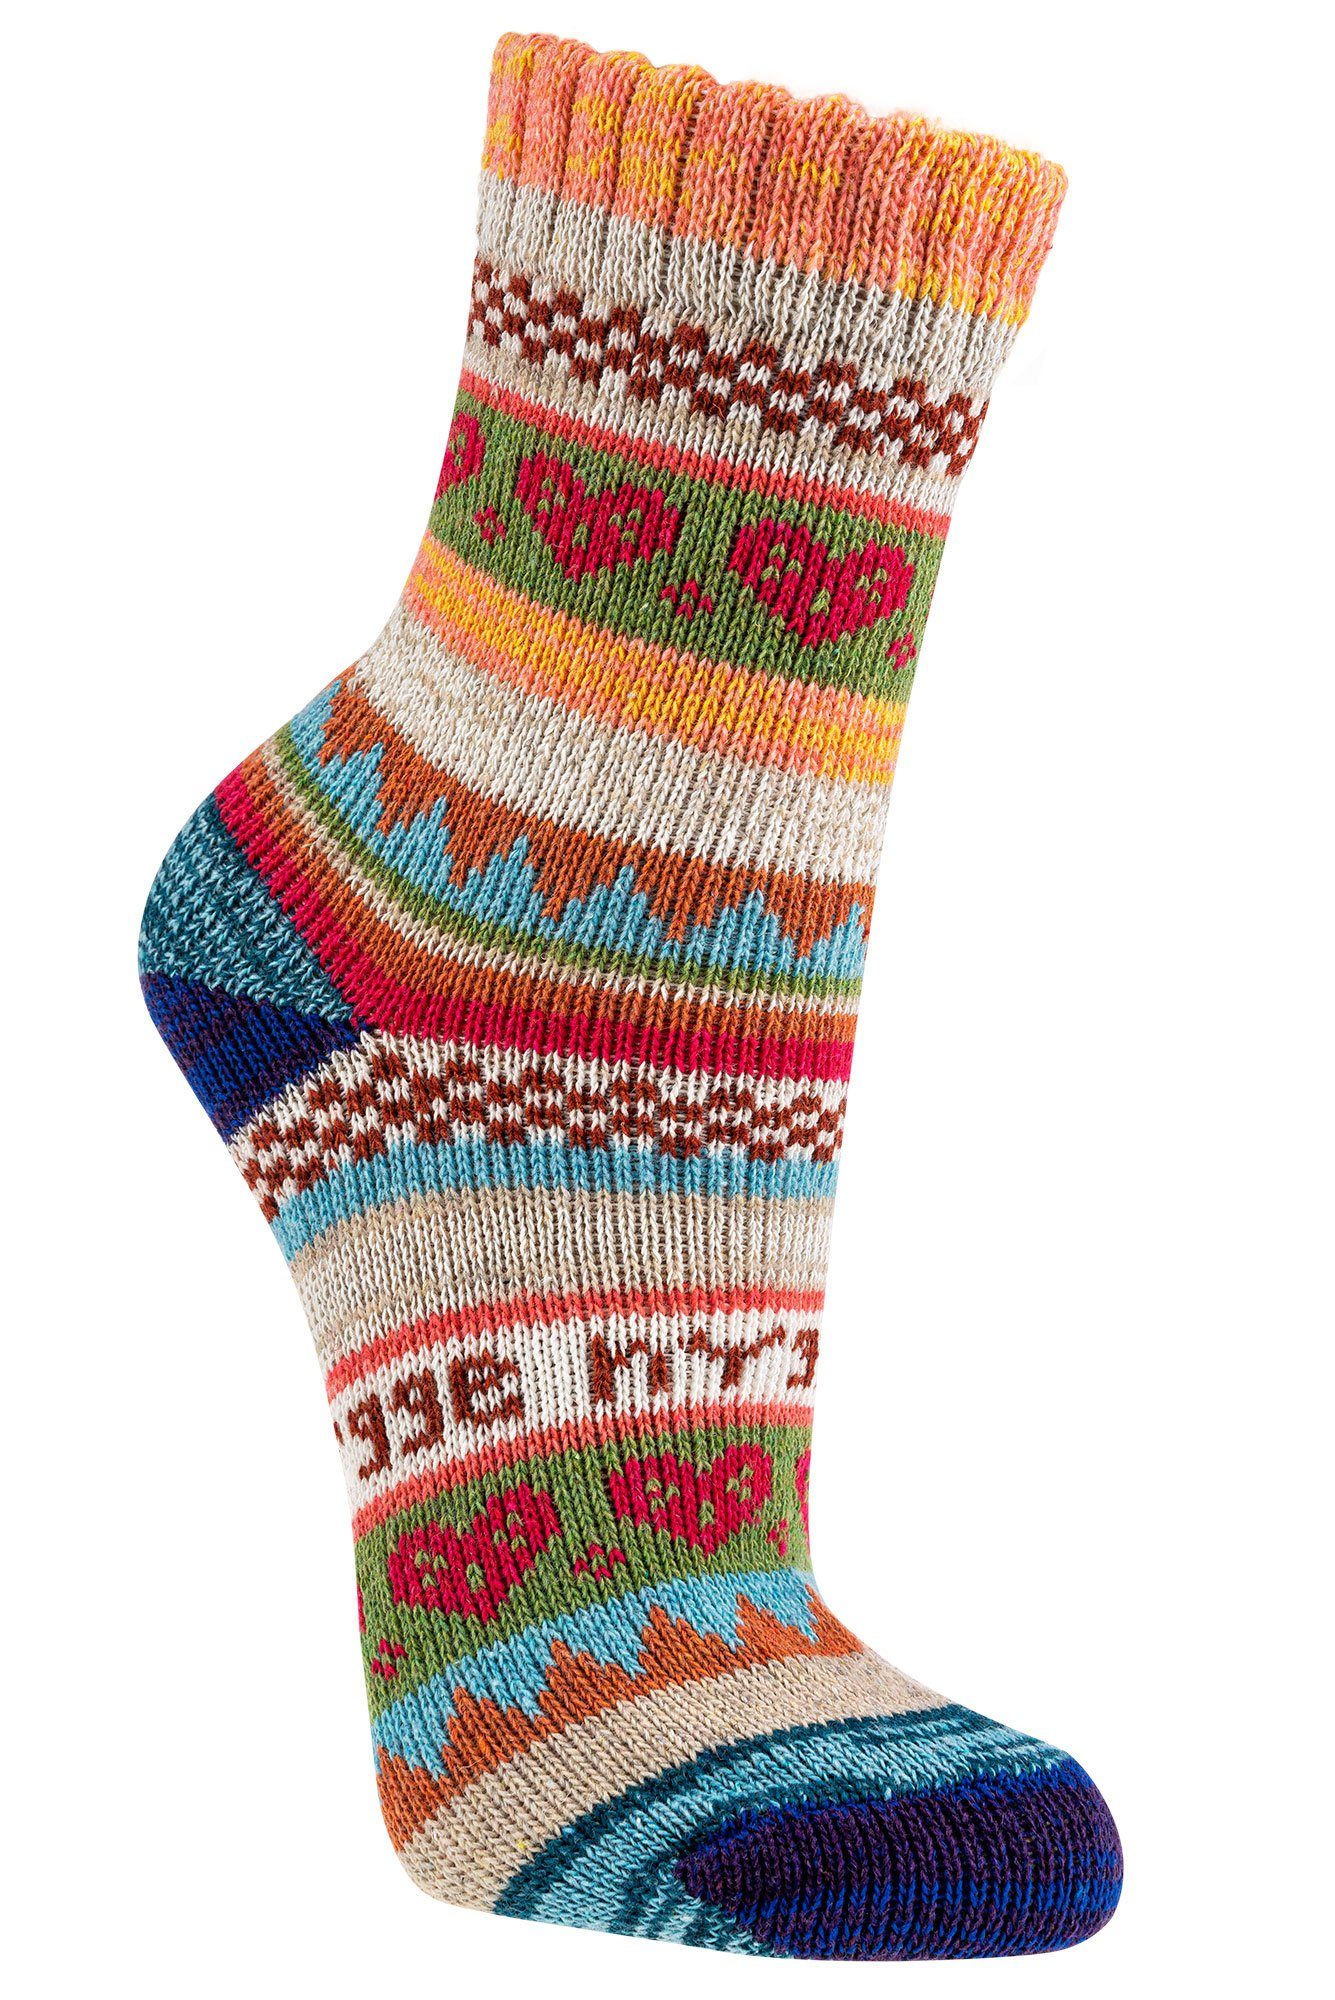 Norweger 4 Socks mit Socken Baumwolle Fun mit Muster Hygge 90% Norwegersocken Bunte schönem